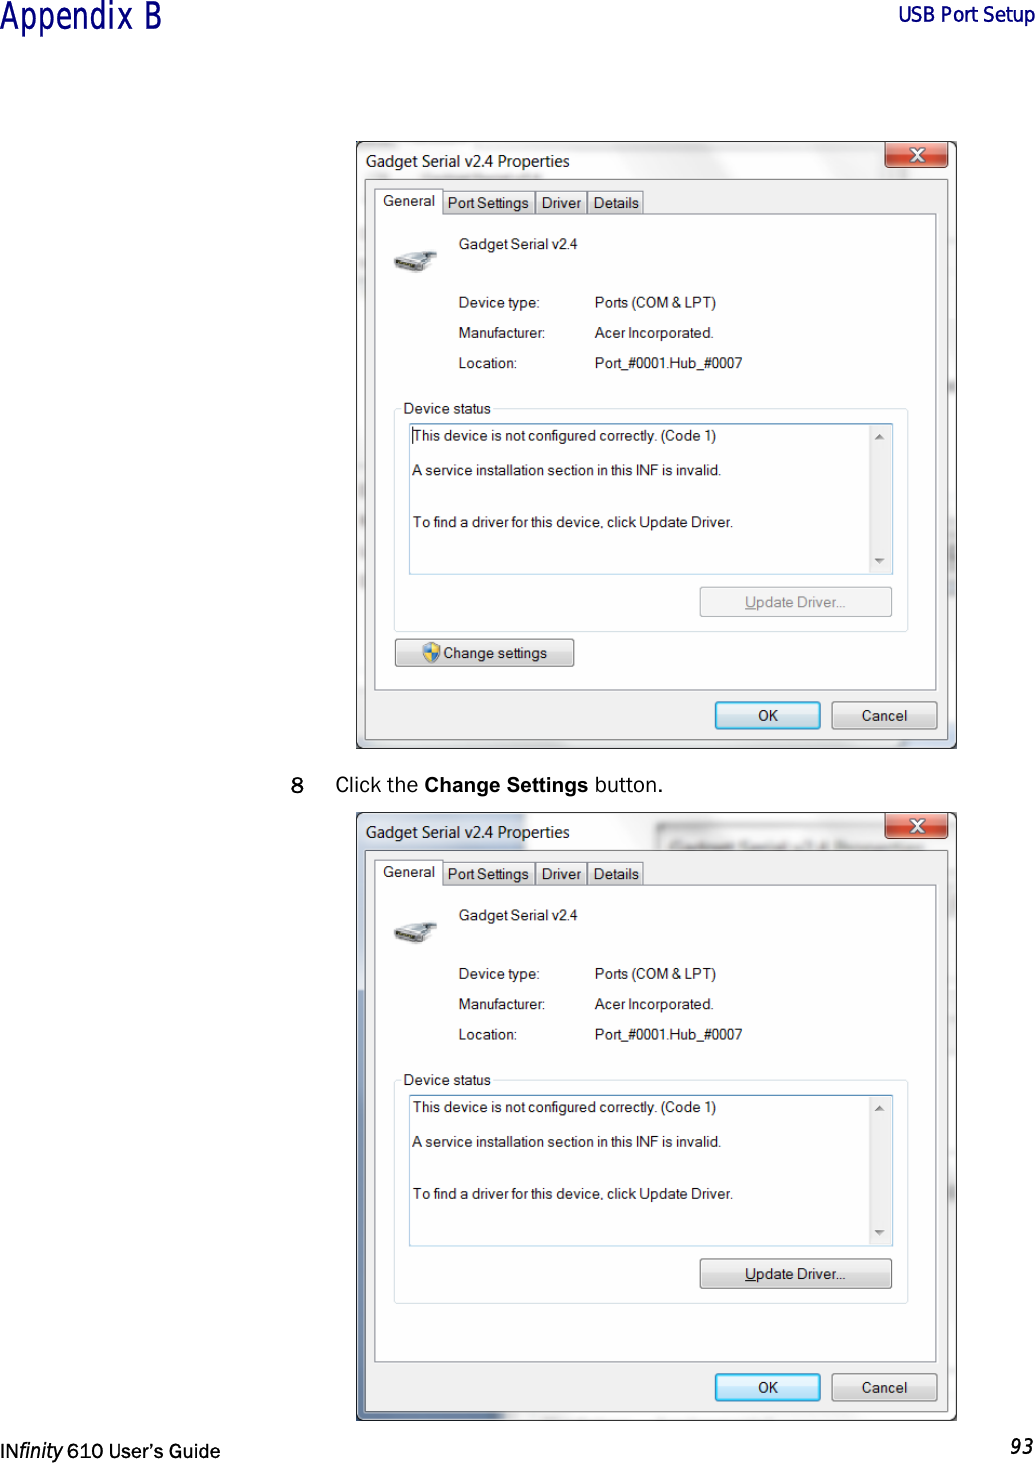  Appendix B        USB Port Setup   INfinity 610 User’s Guide  93   8 Click the Change Settings button.  